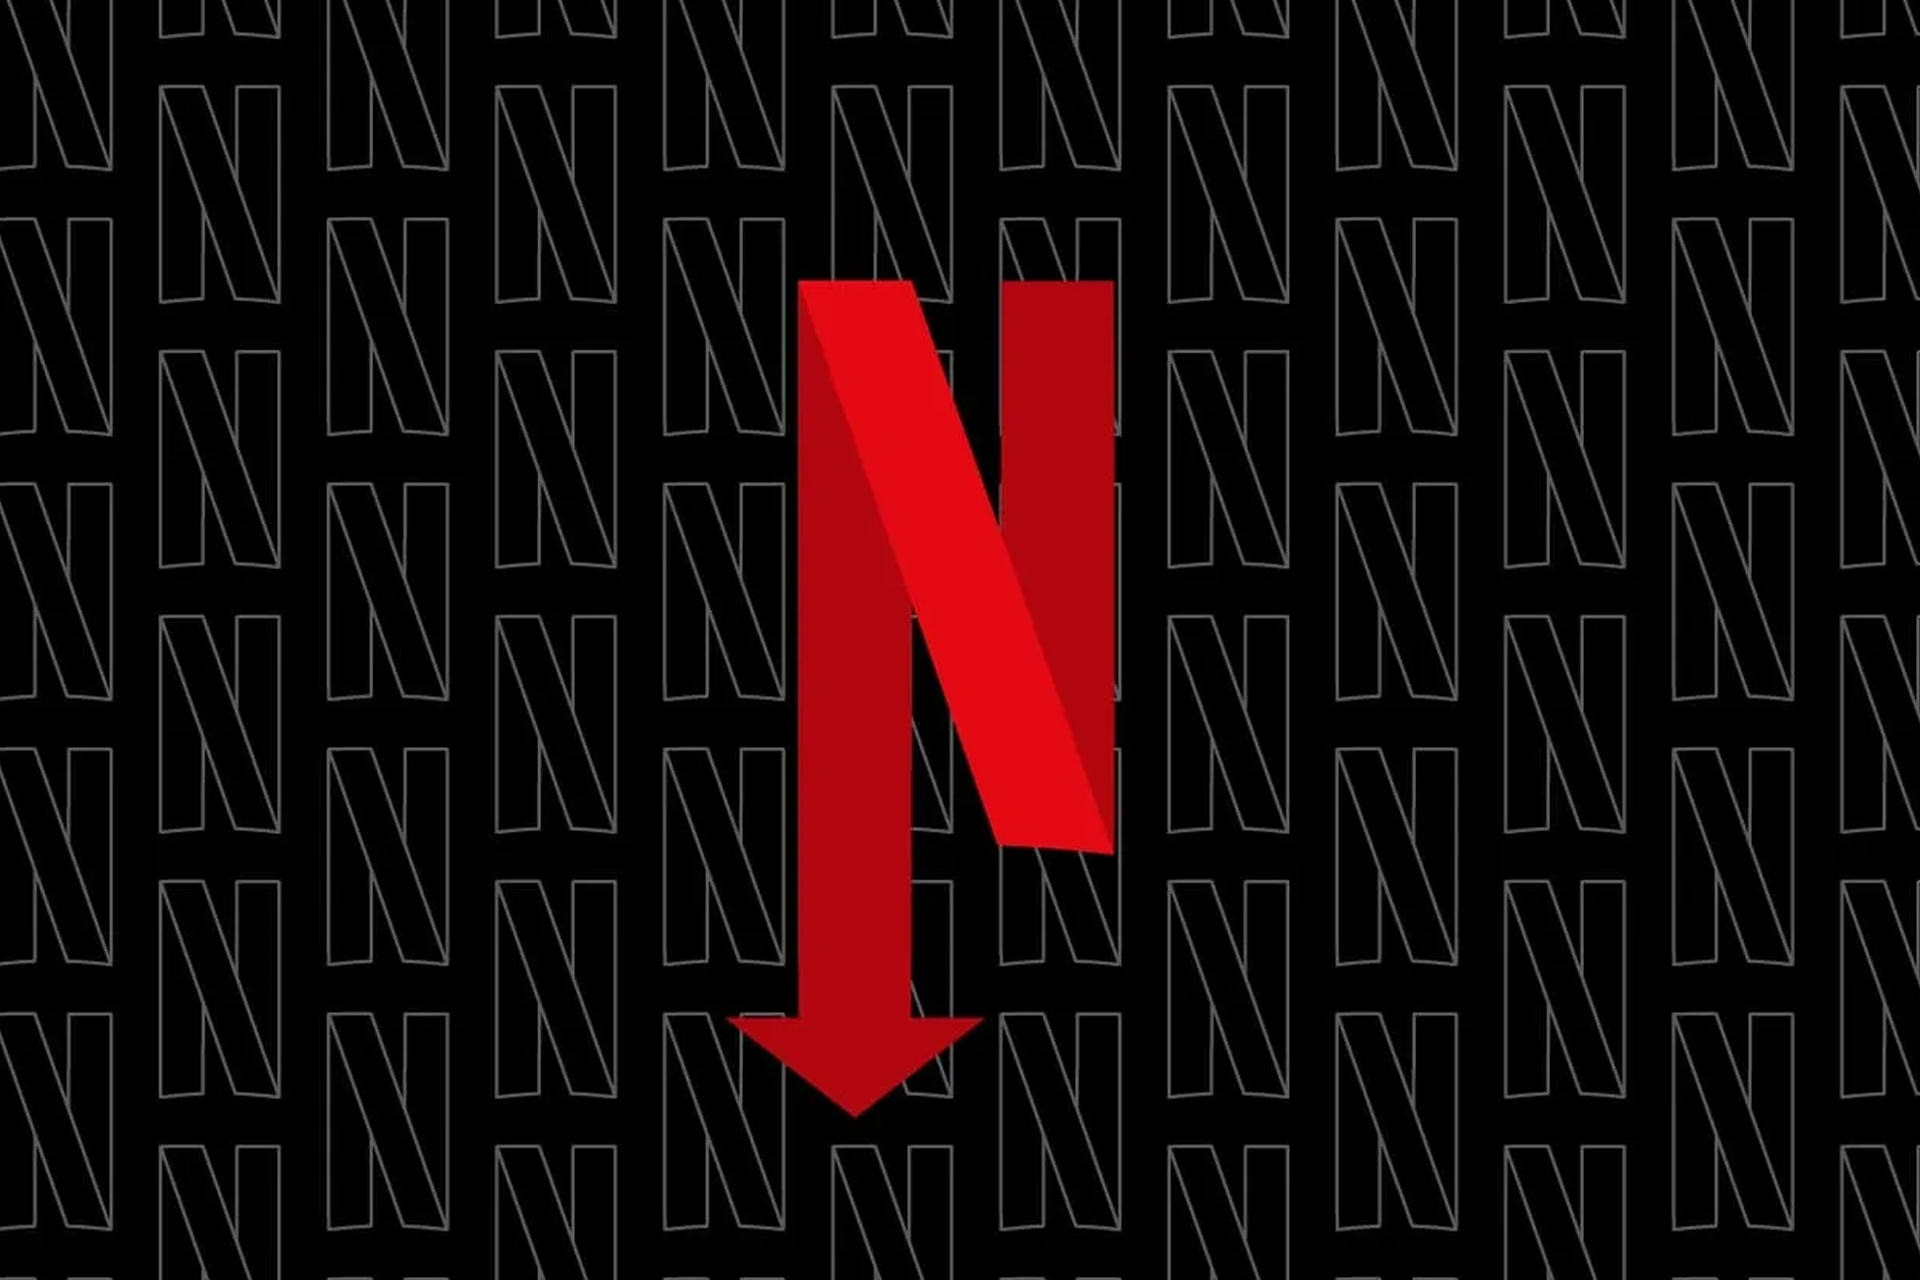 2022 9 netflix logo red black down illustration 638c6a433801d1ddad8e3e1d